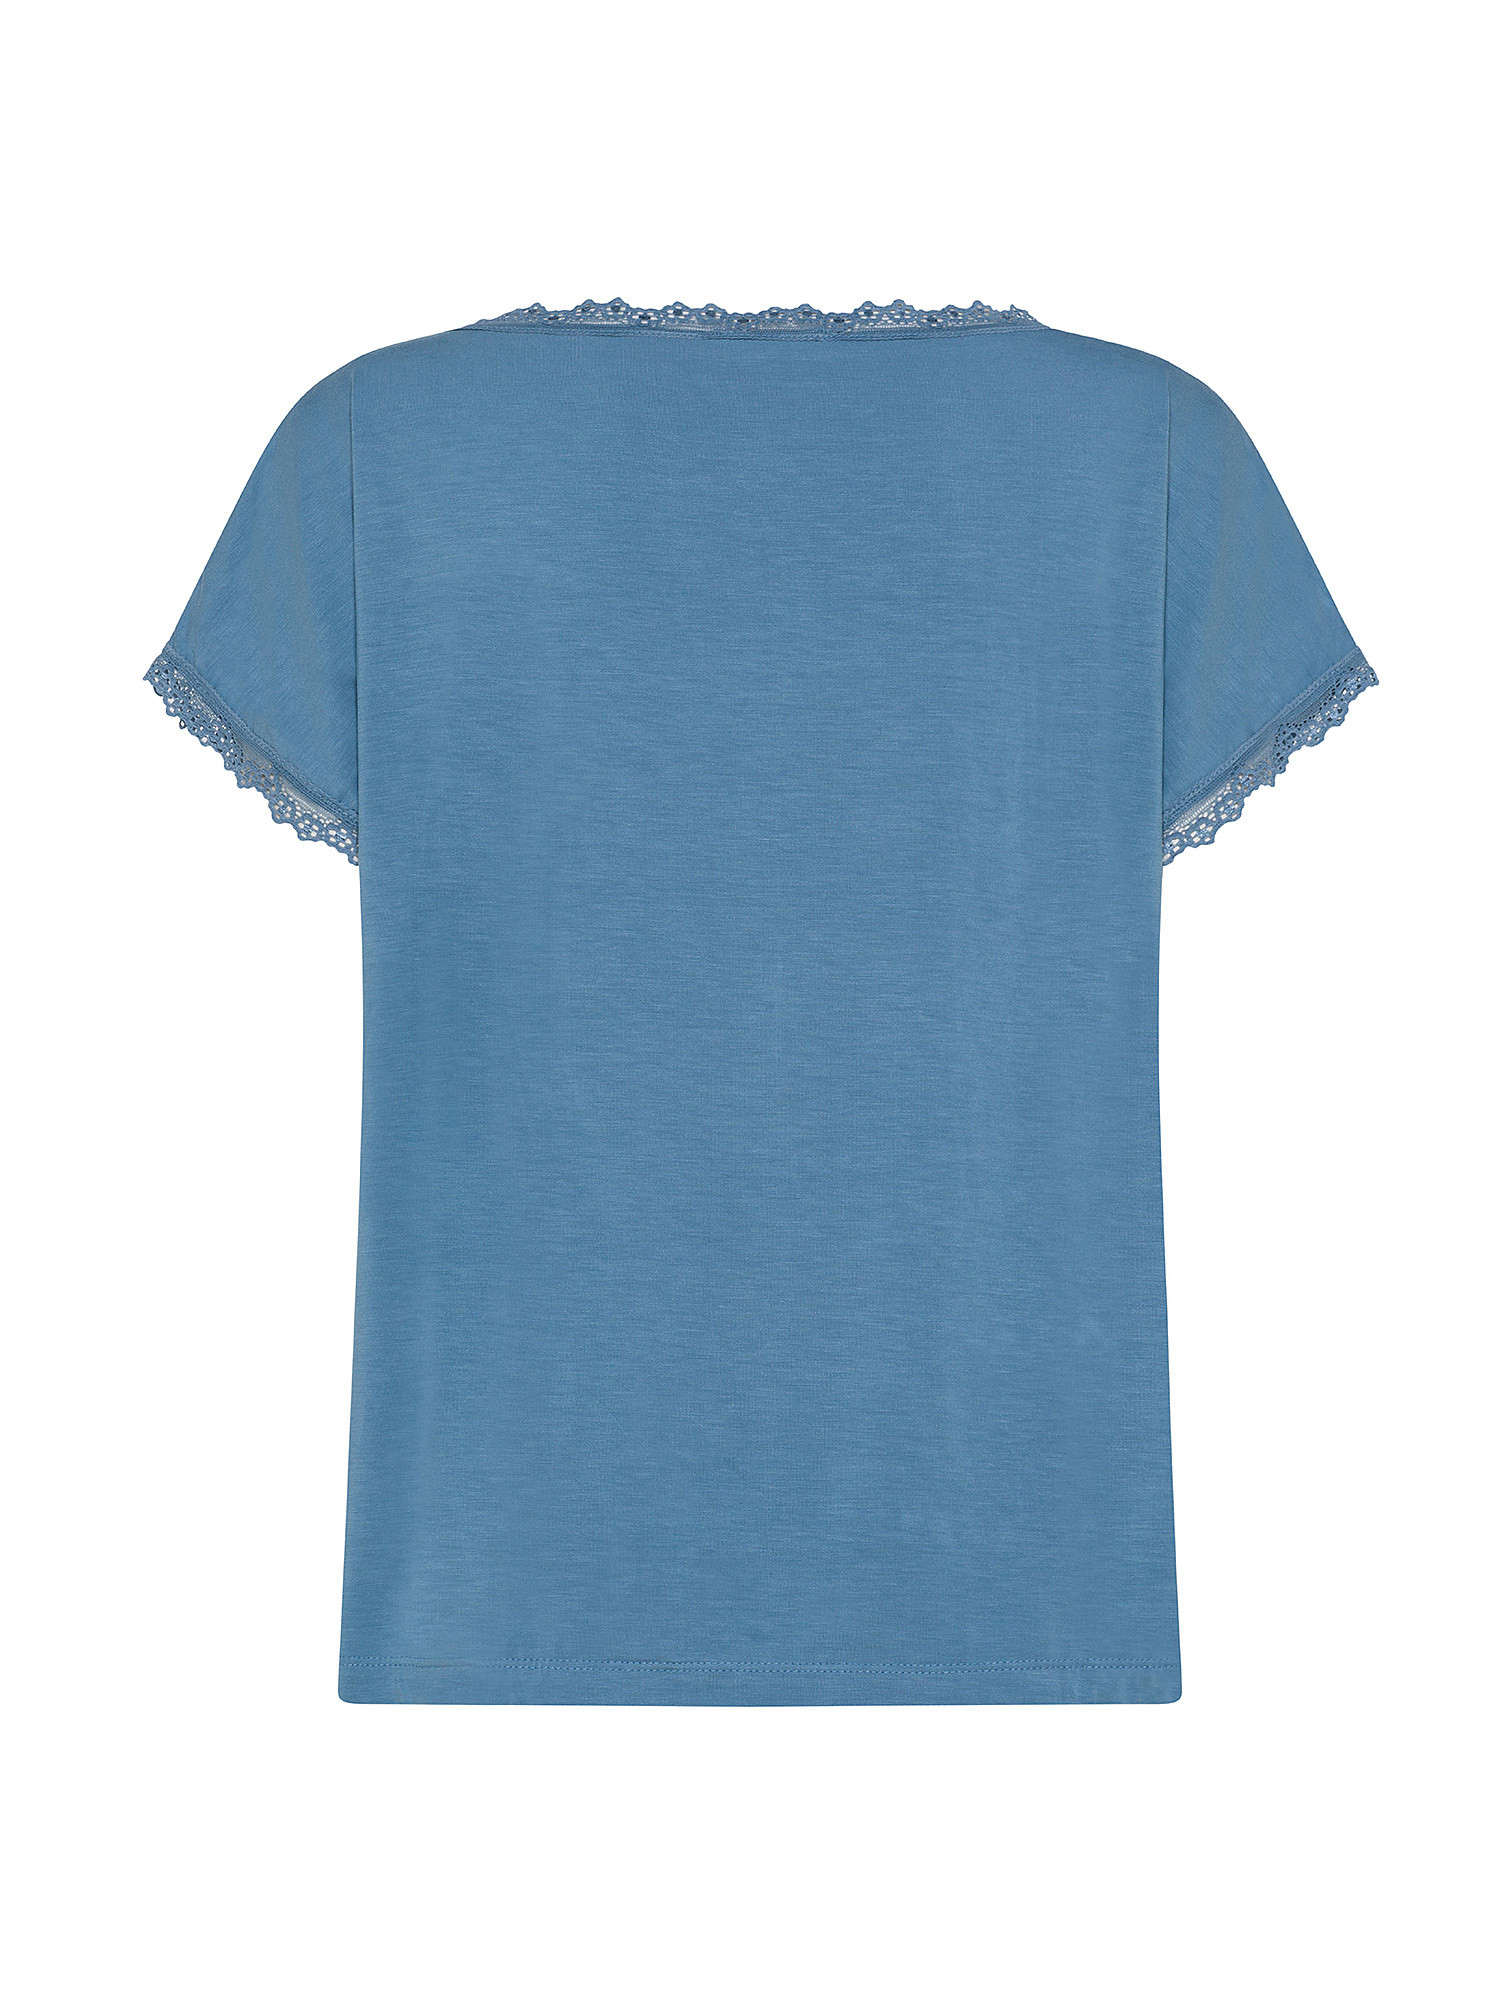 T-shirt in viscosa di bamboo tinta unita, Azzurro, large image number 1